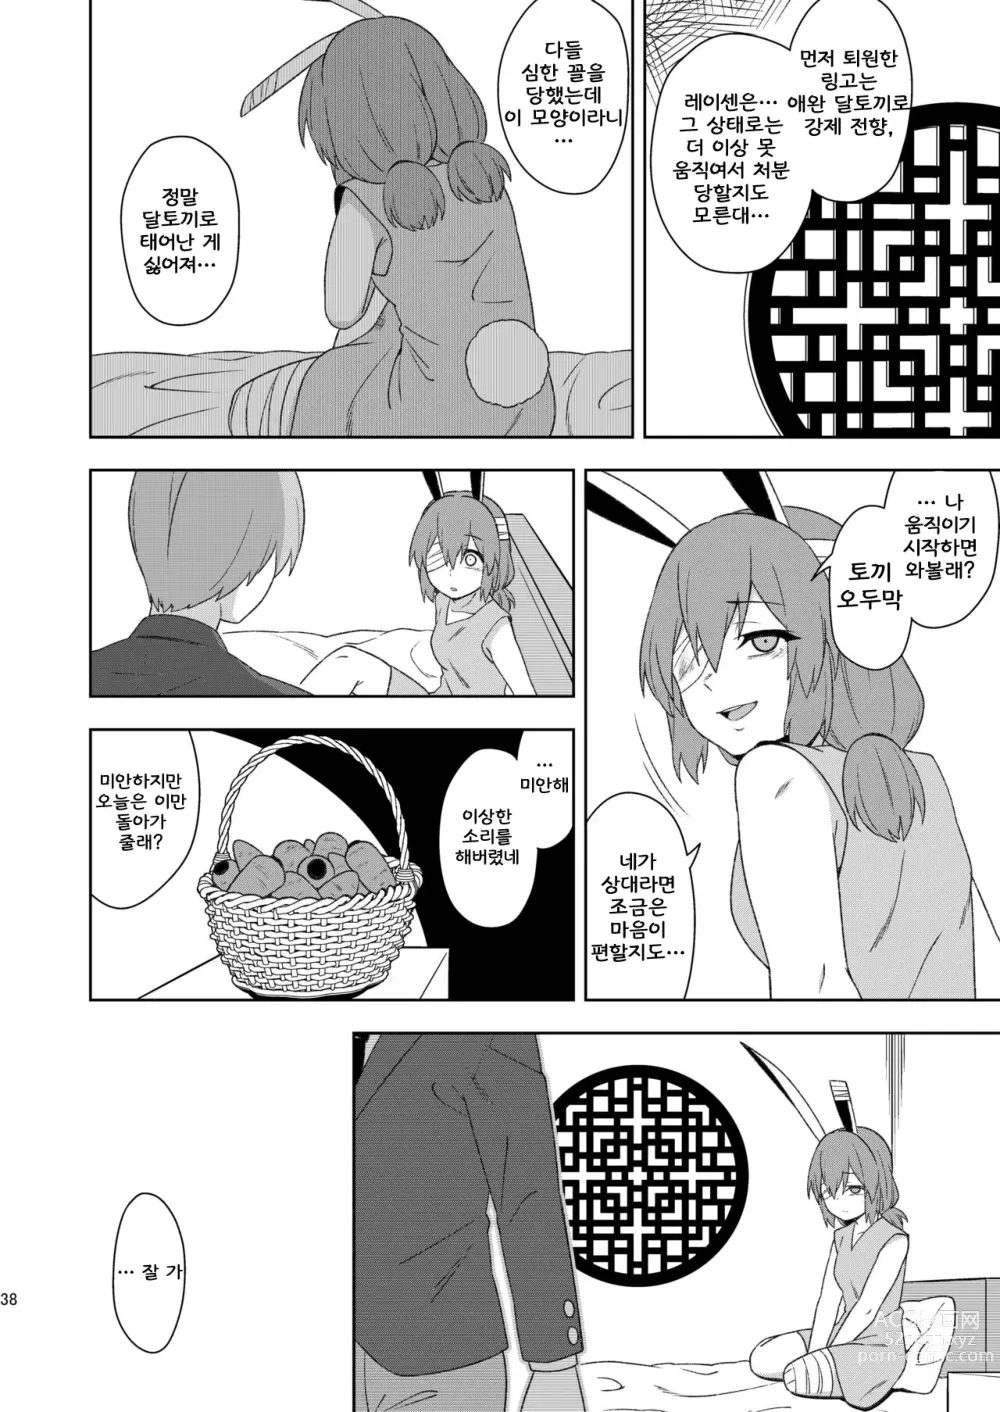 Page 38 of doujinshi 전화의 달토끼